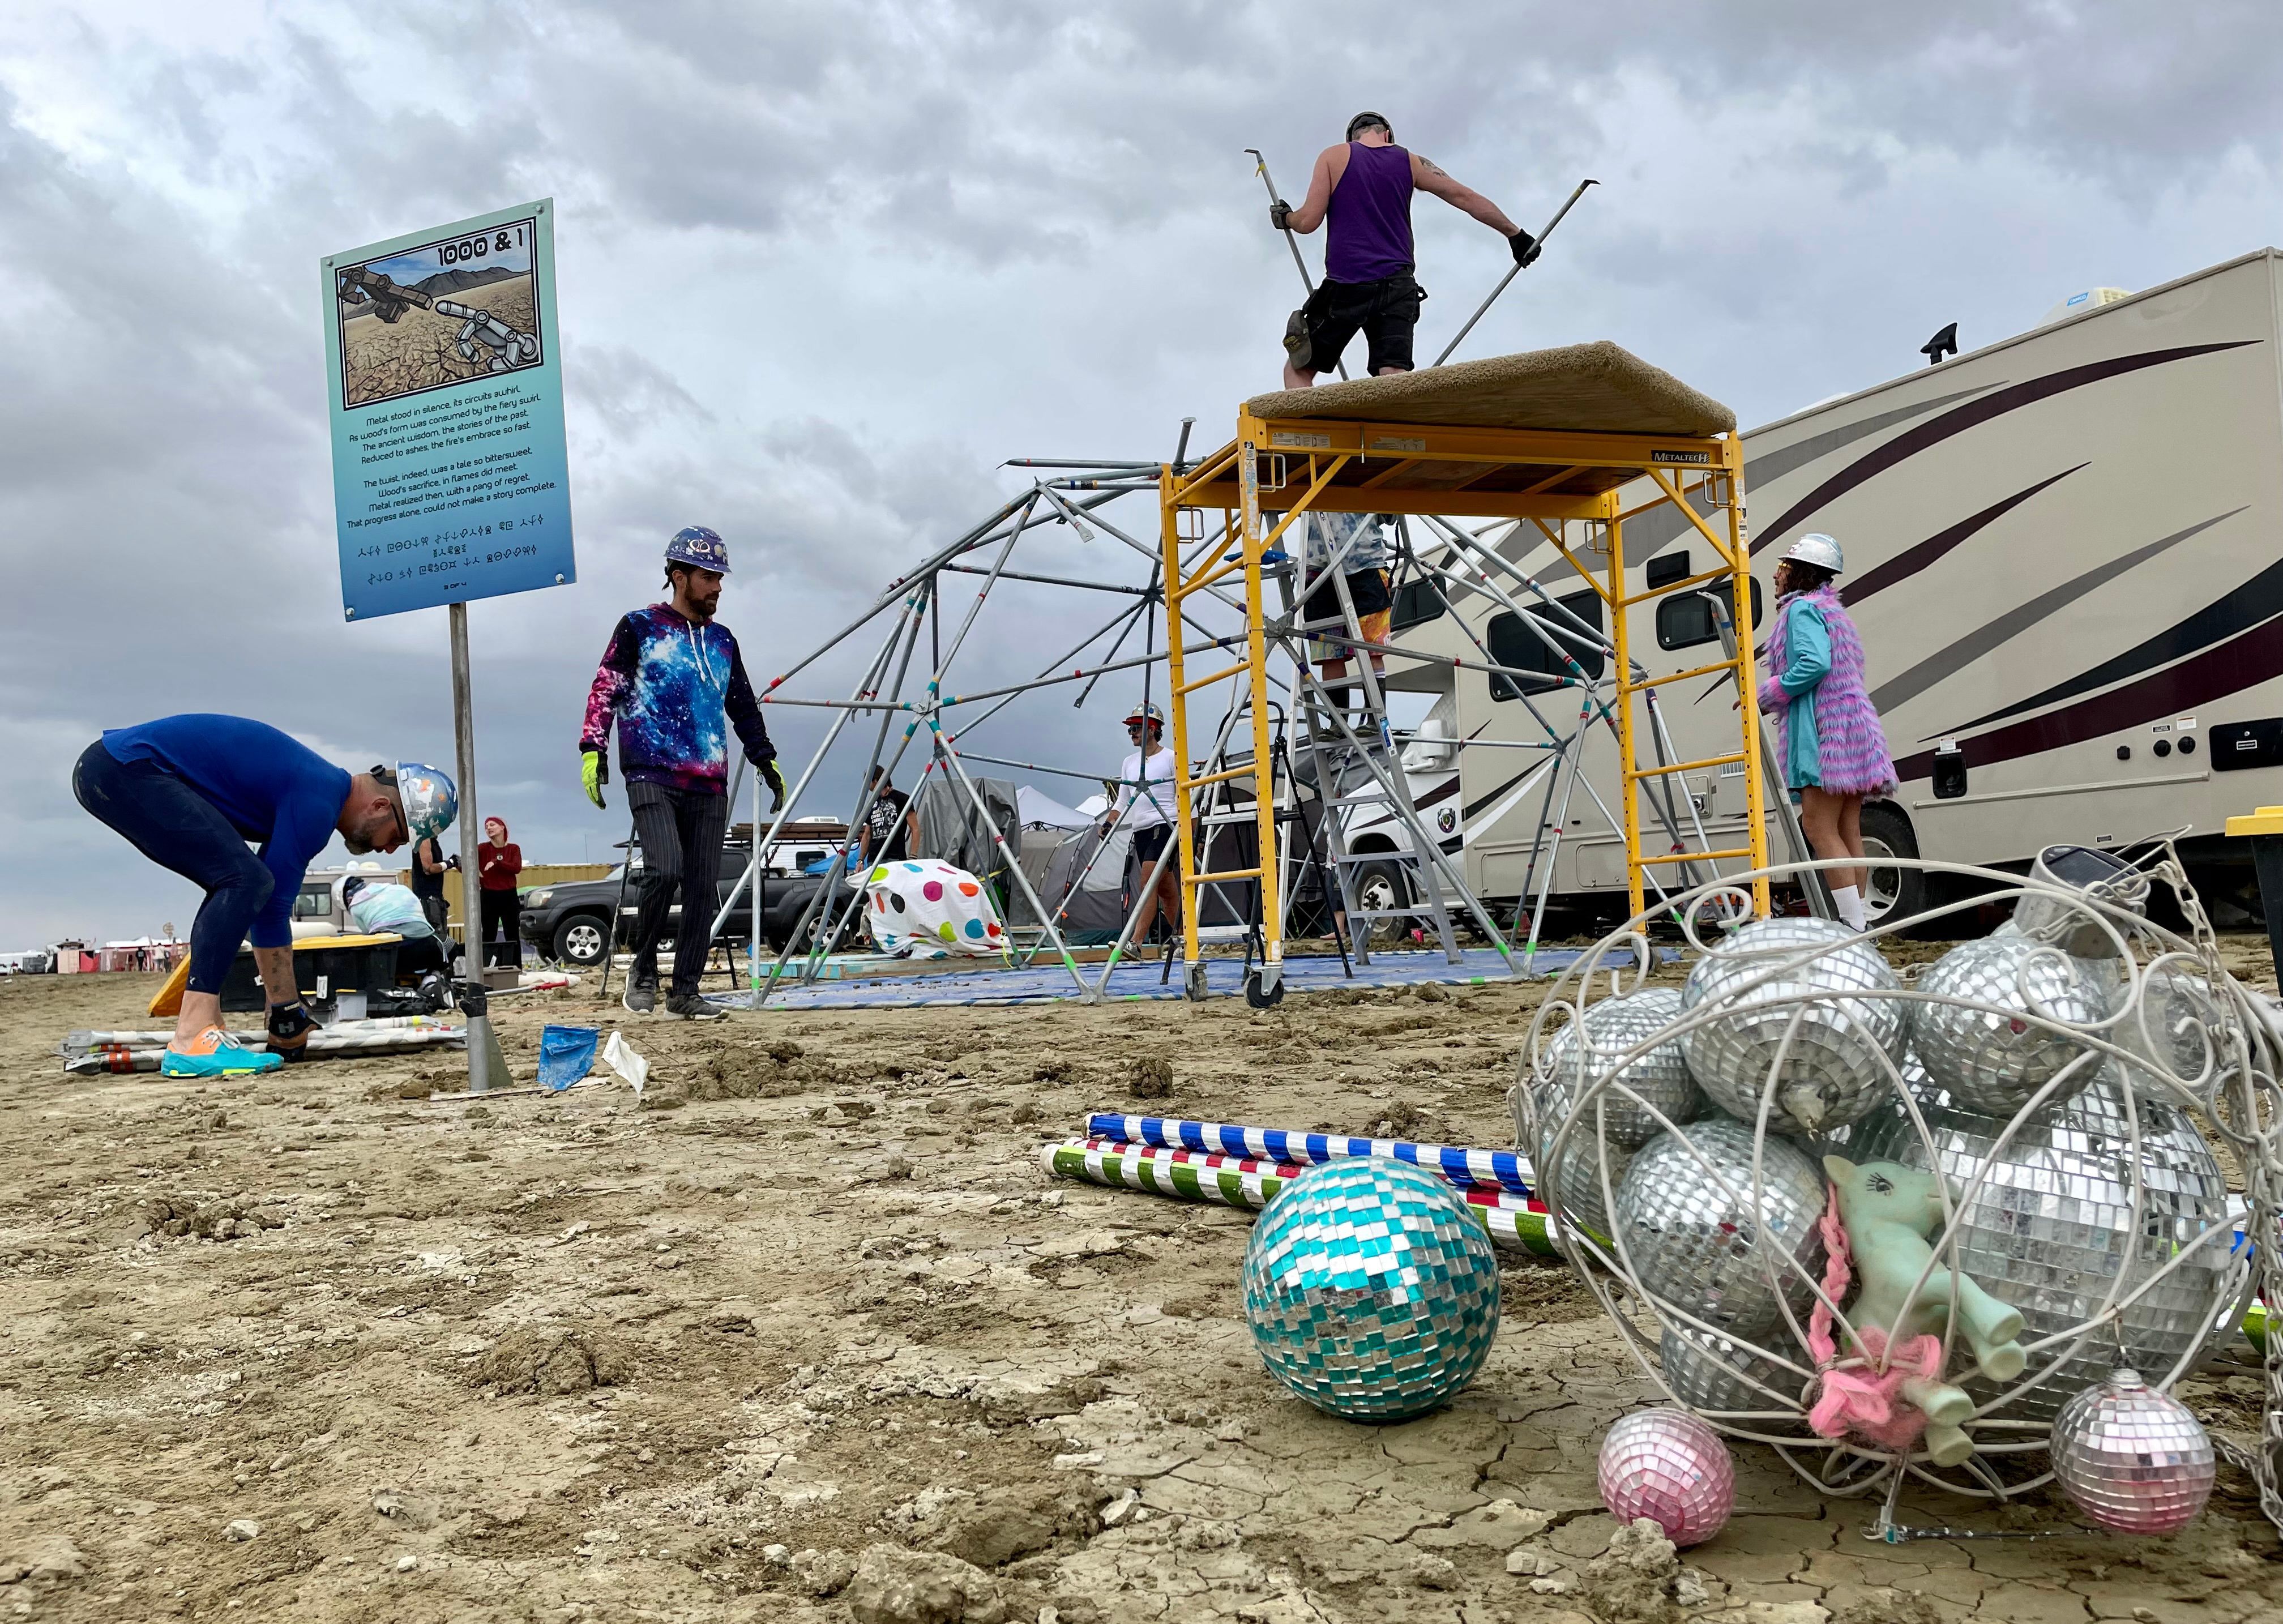 Scenes From The Burning Man Flood WorldNewsEra